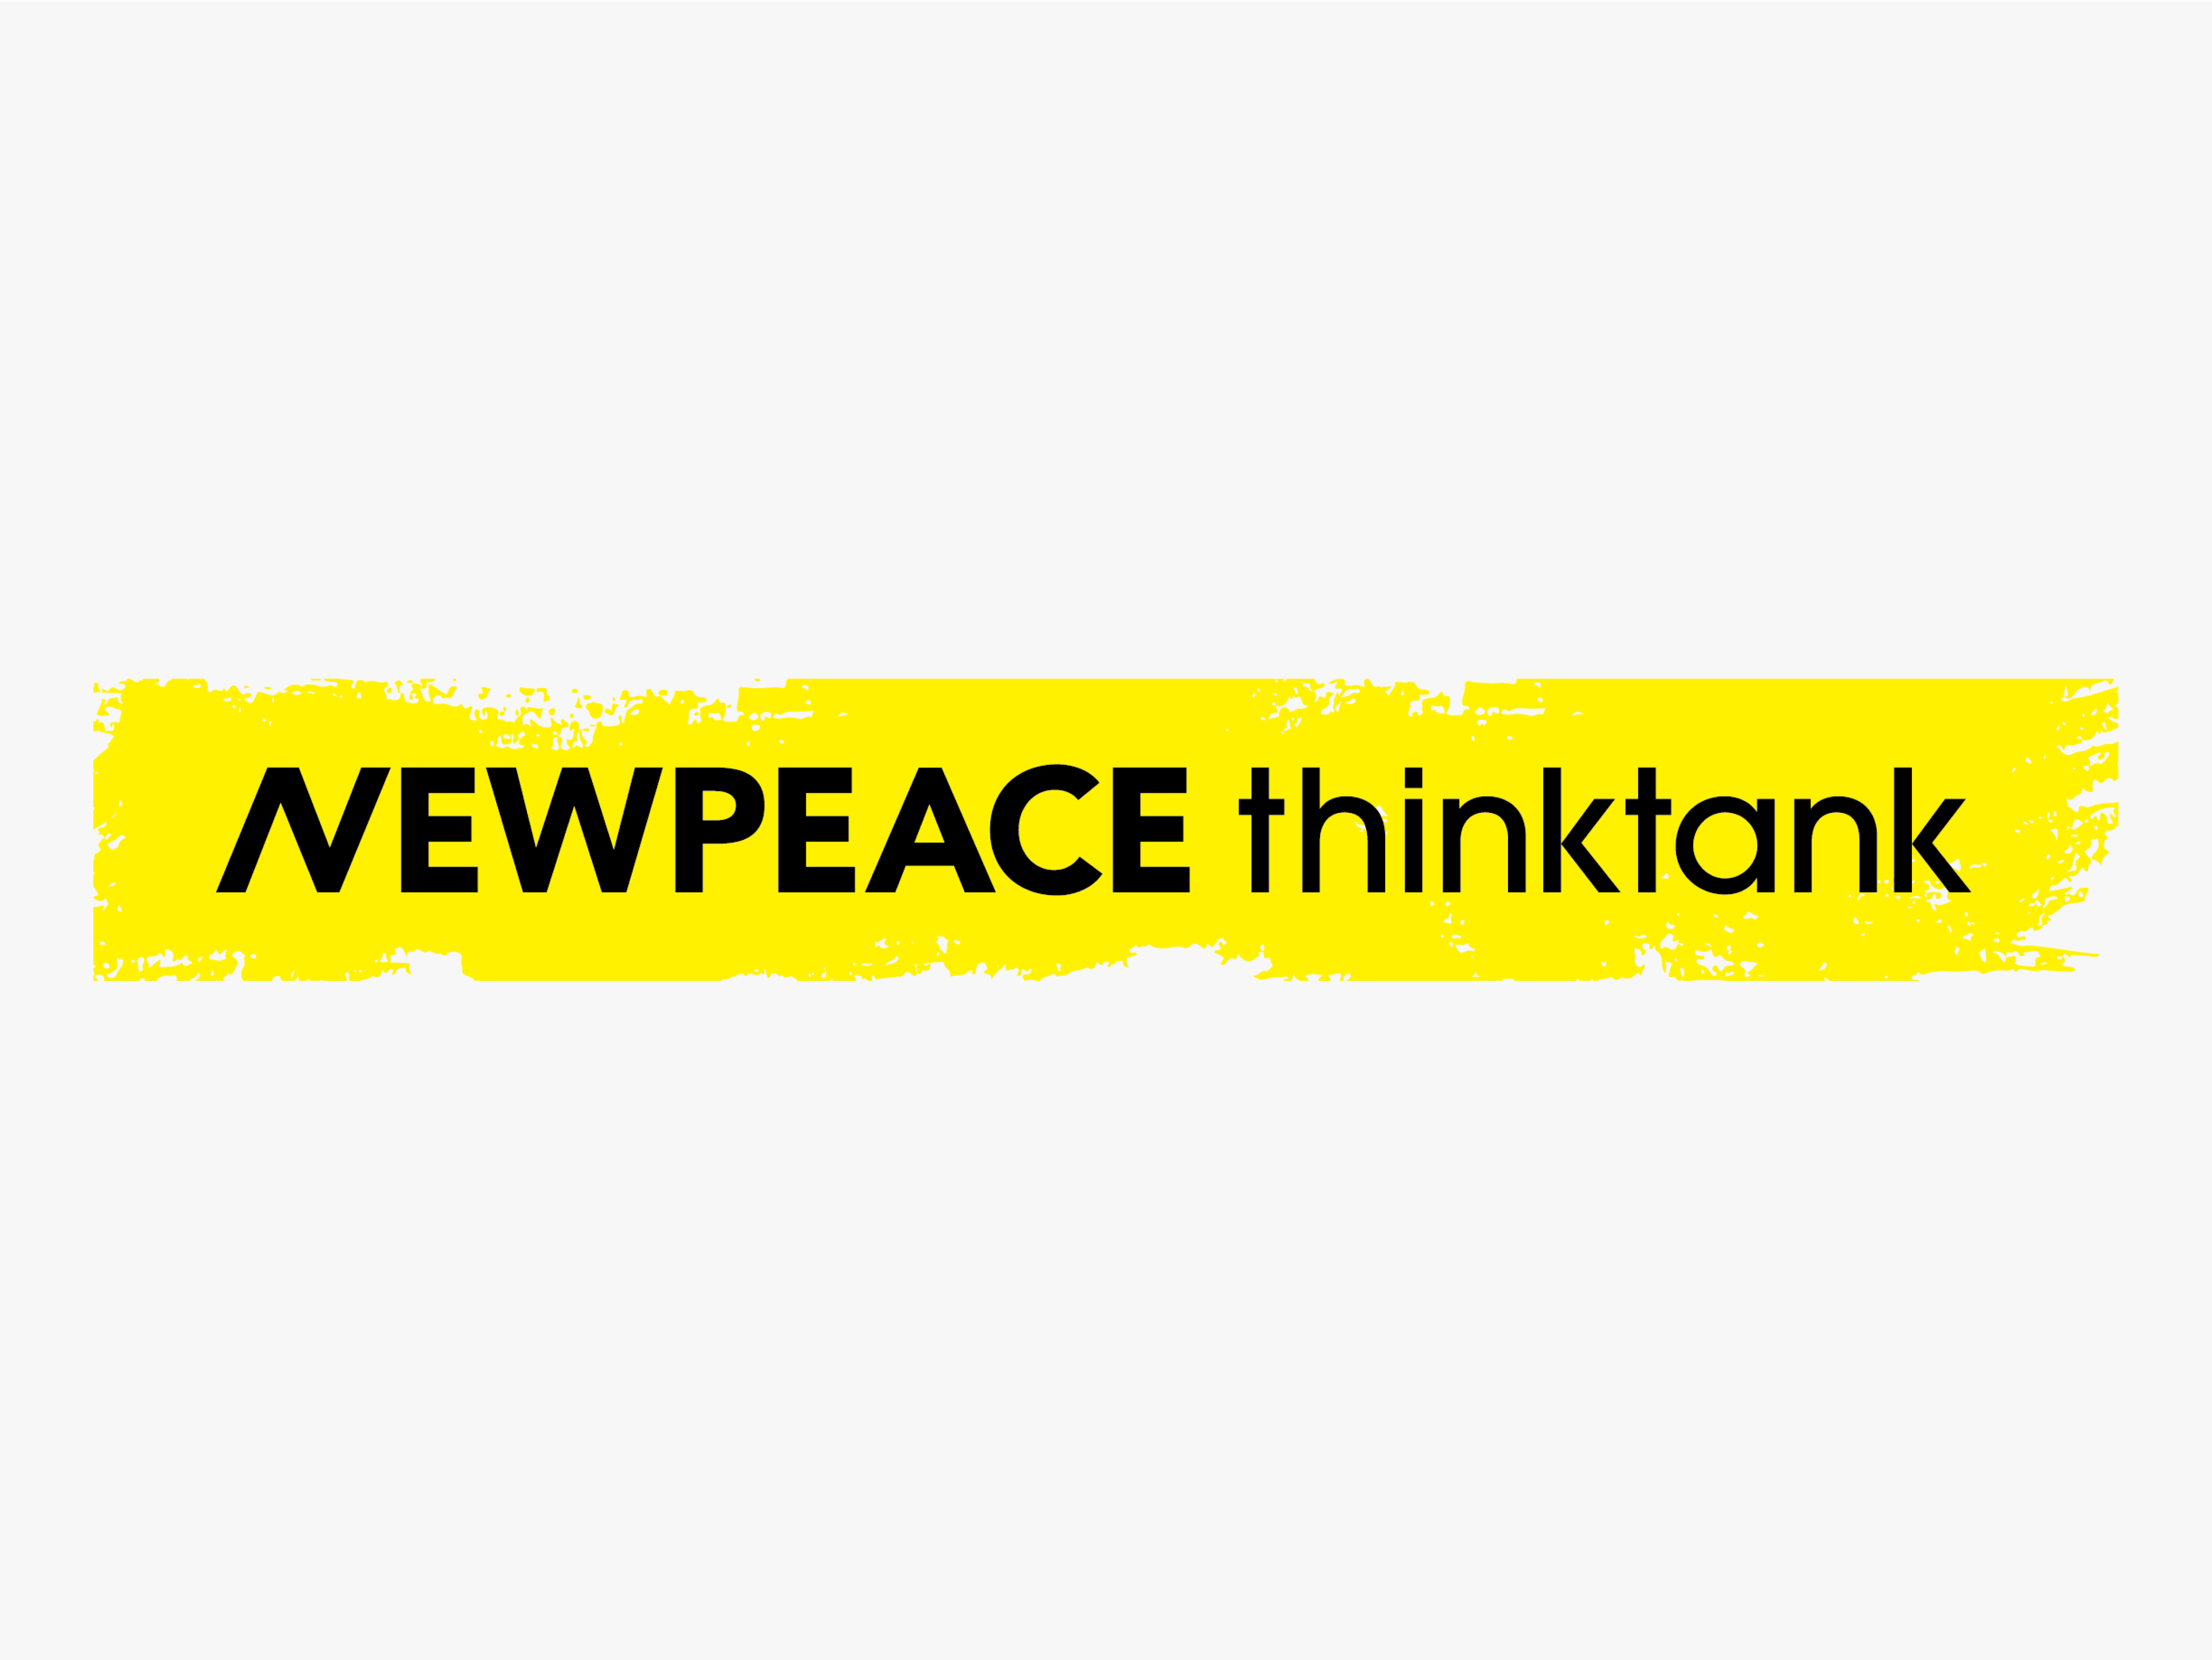 NEWPEACE thinktank Service Brandingのサンプル画像です